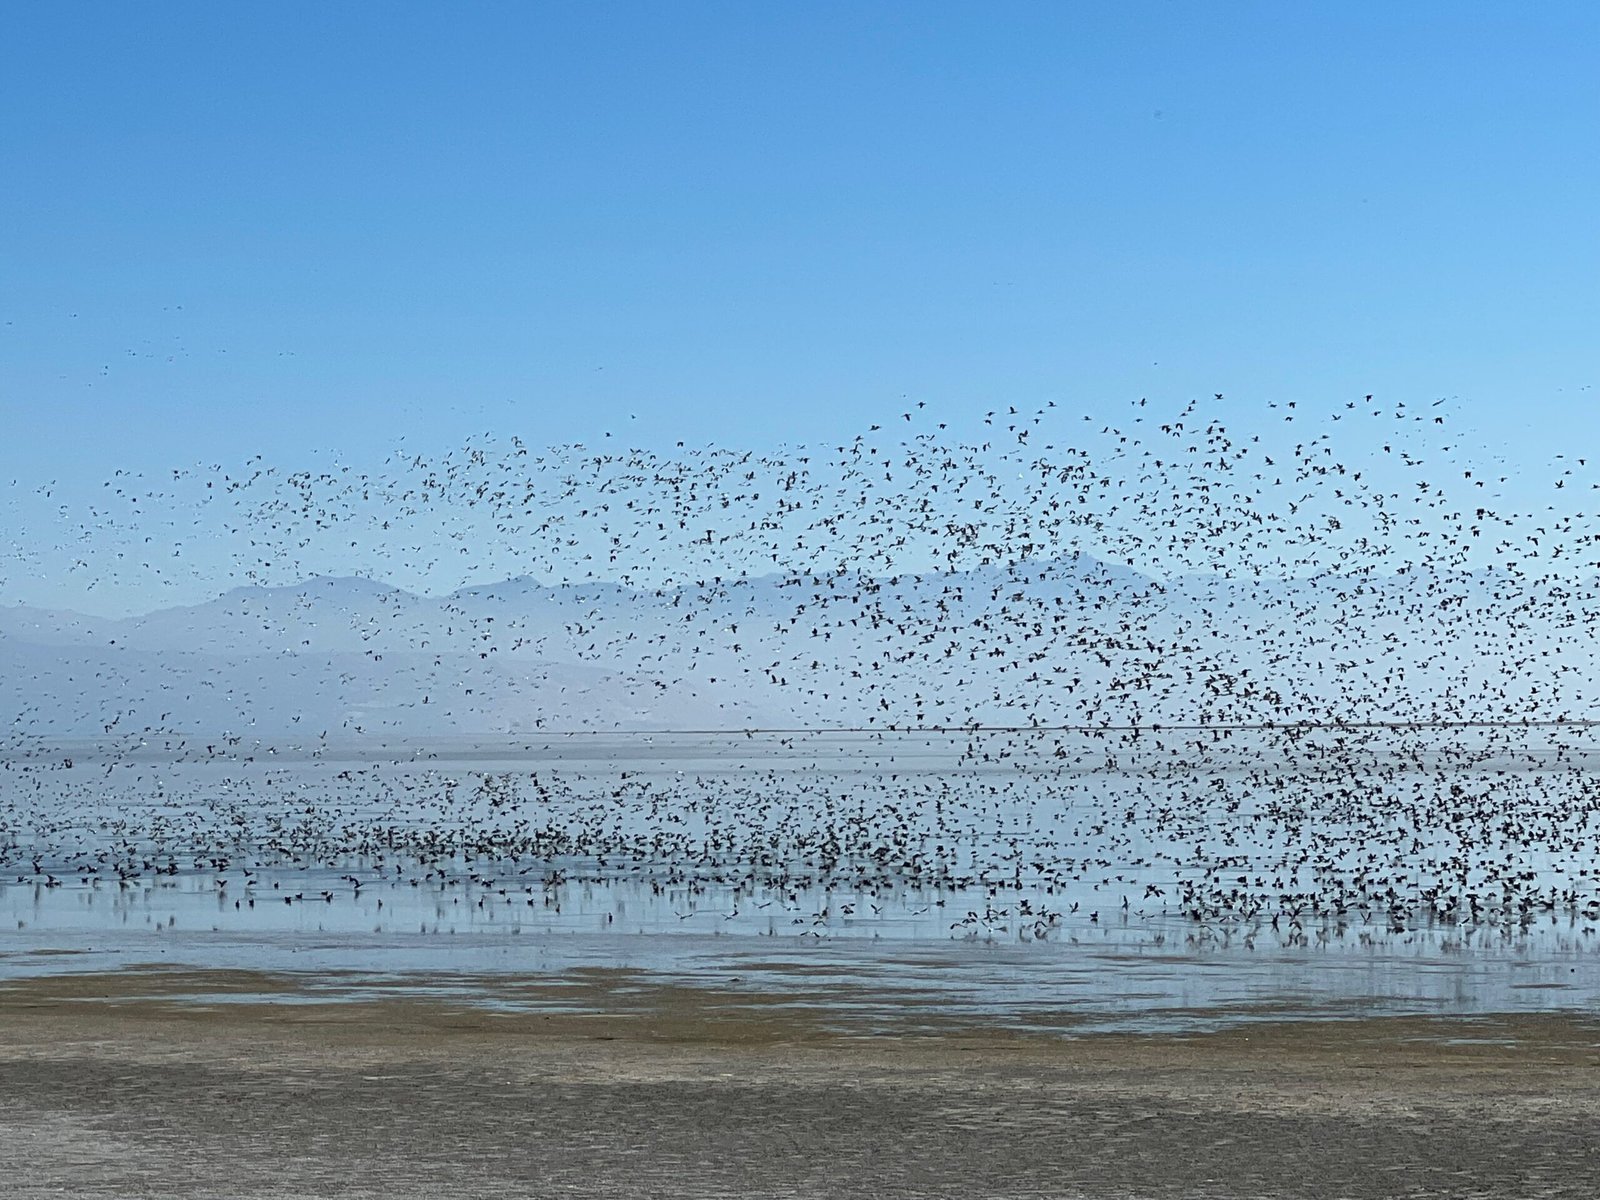 Flocks of birds fly over the Great Salt Lake.